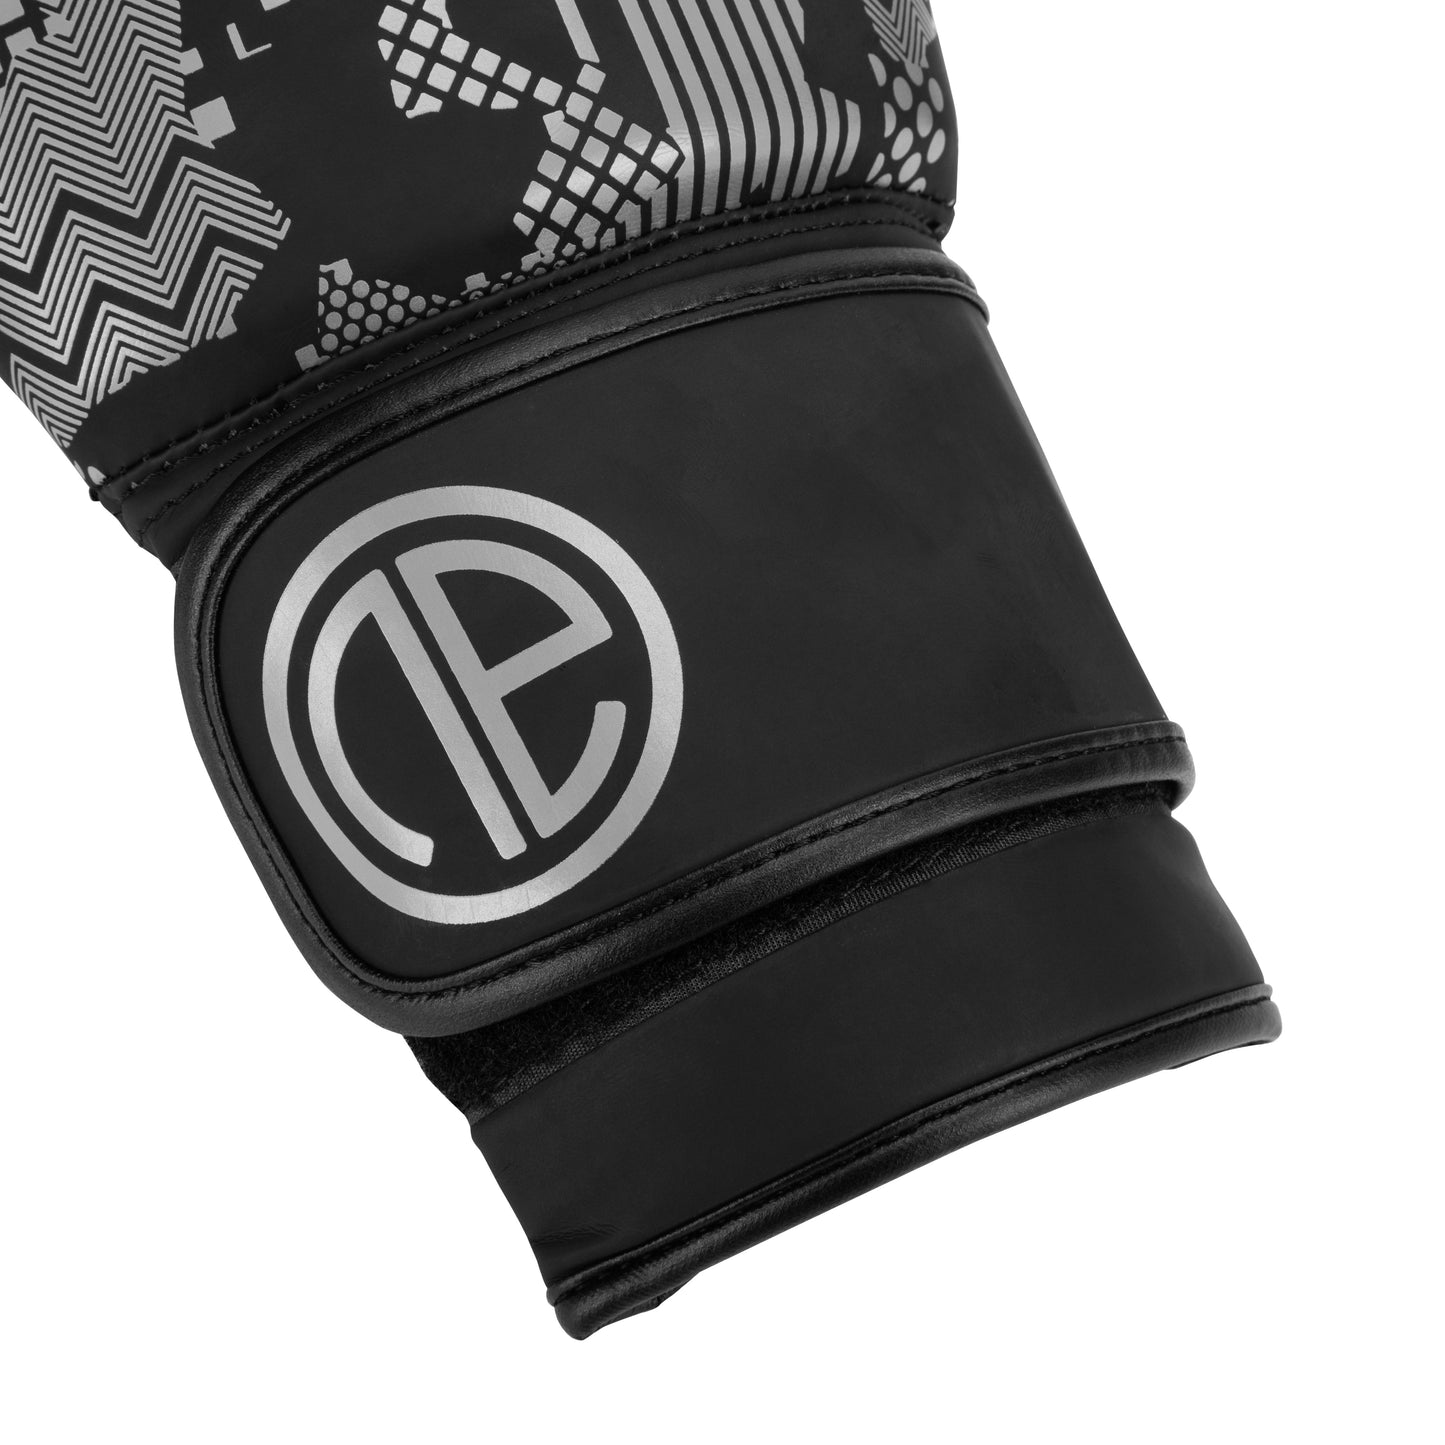 OA CHALLENGER Mk I Training Glove - Strap - Silver/Black